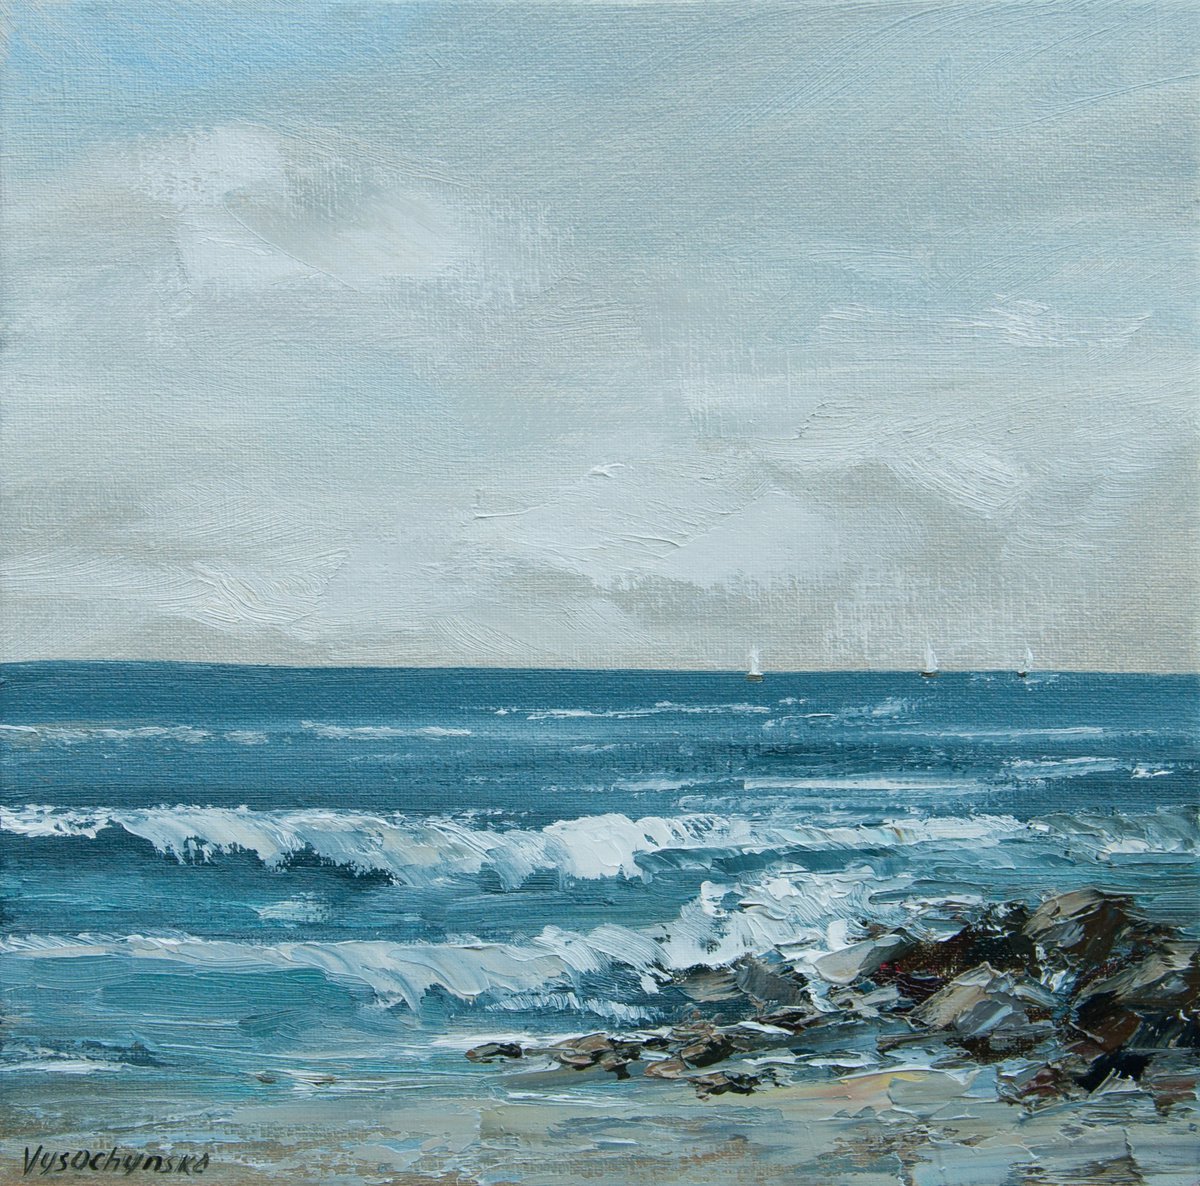 Seascape. Oil painting. Ocean, waves, stones coast. Small painting. 8 x 8 in. by Tetiana Vysochynska